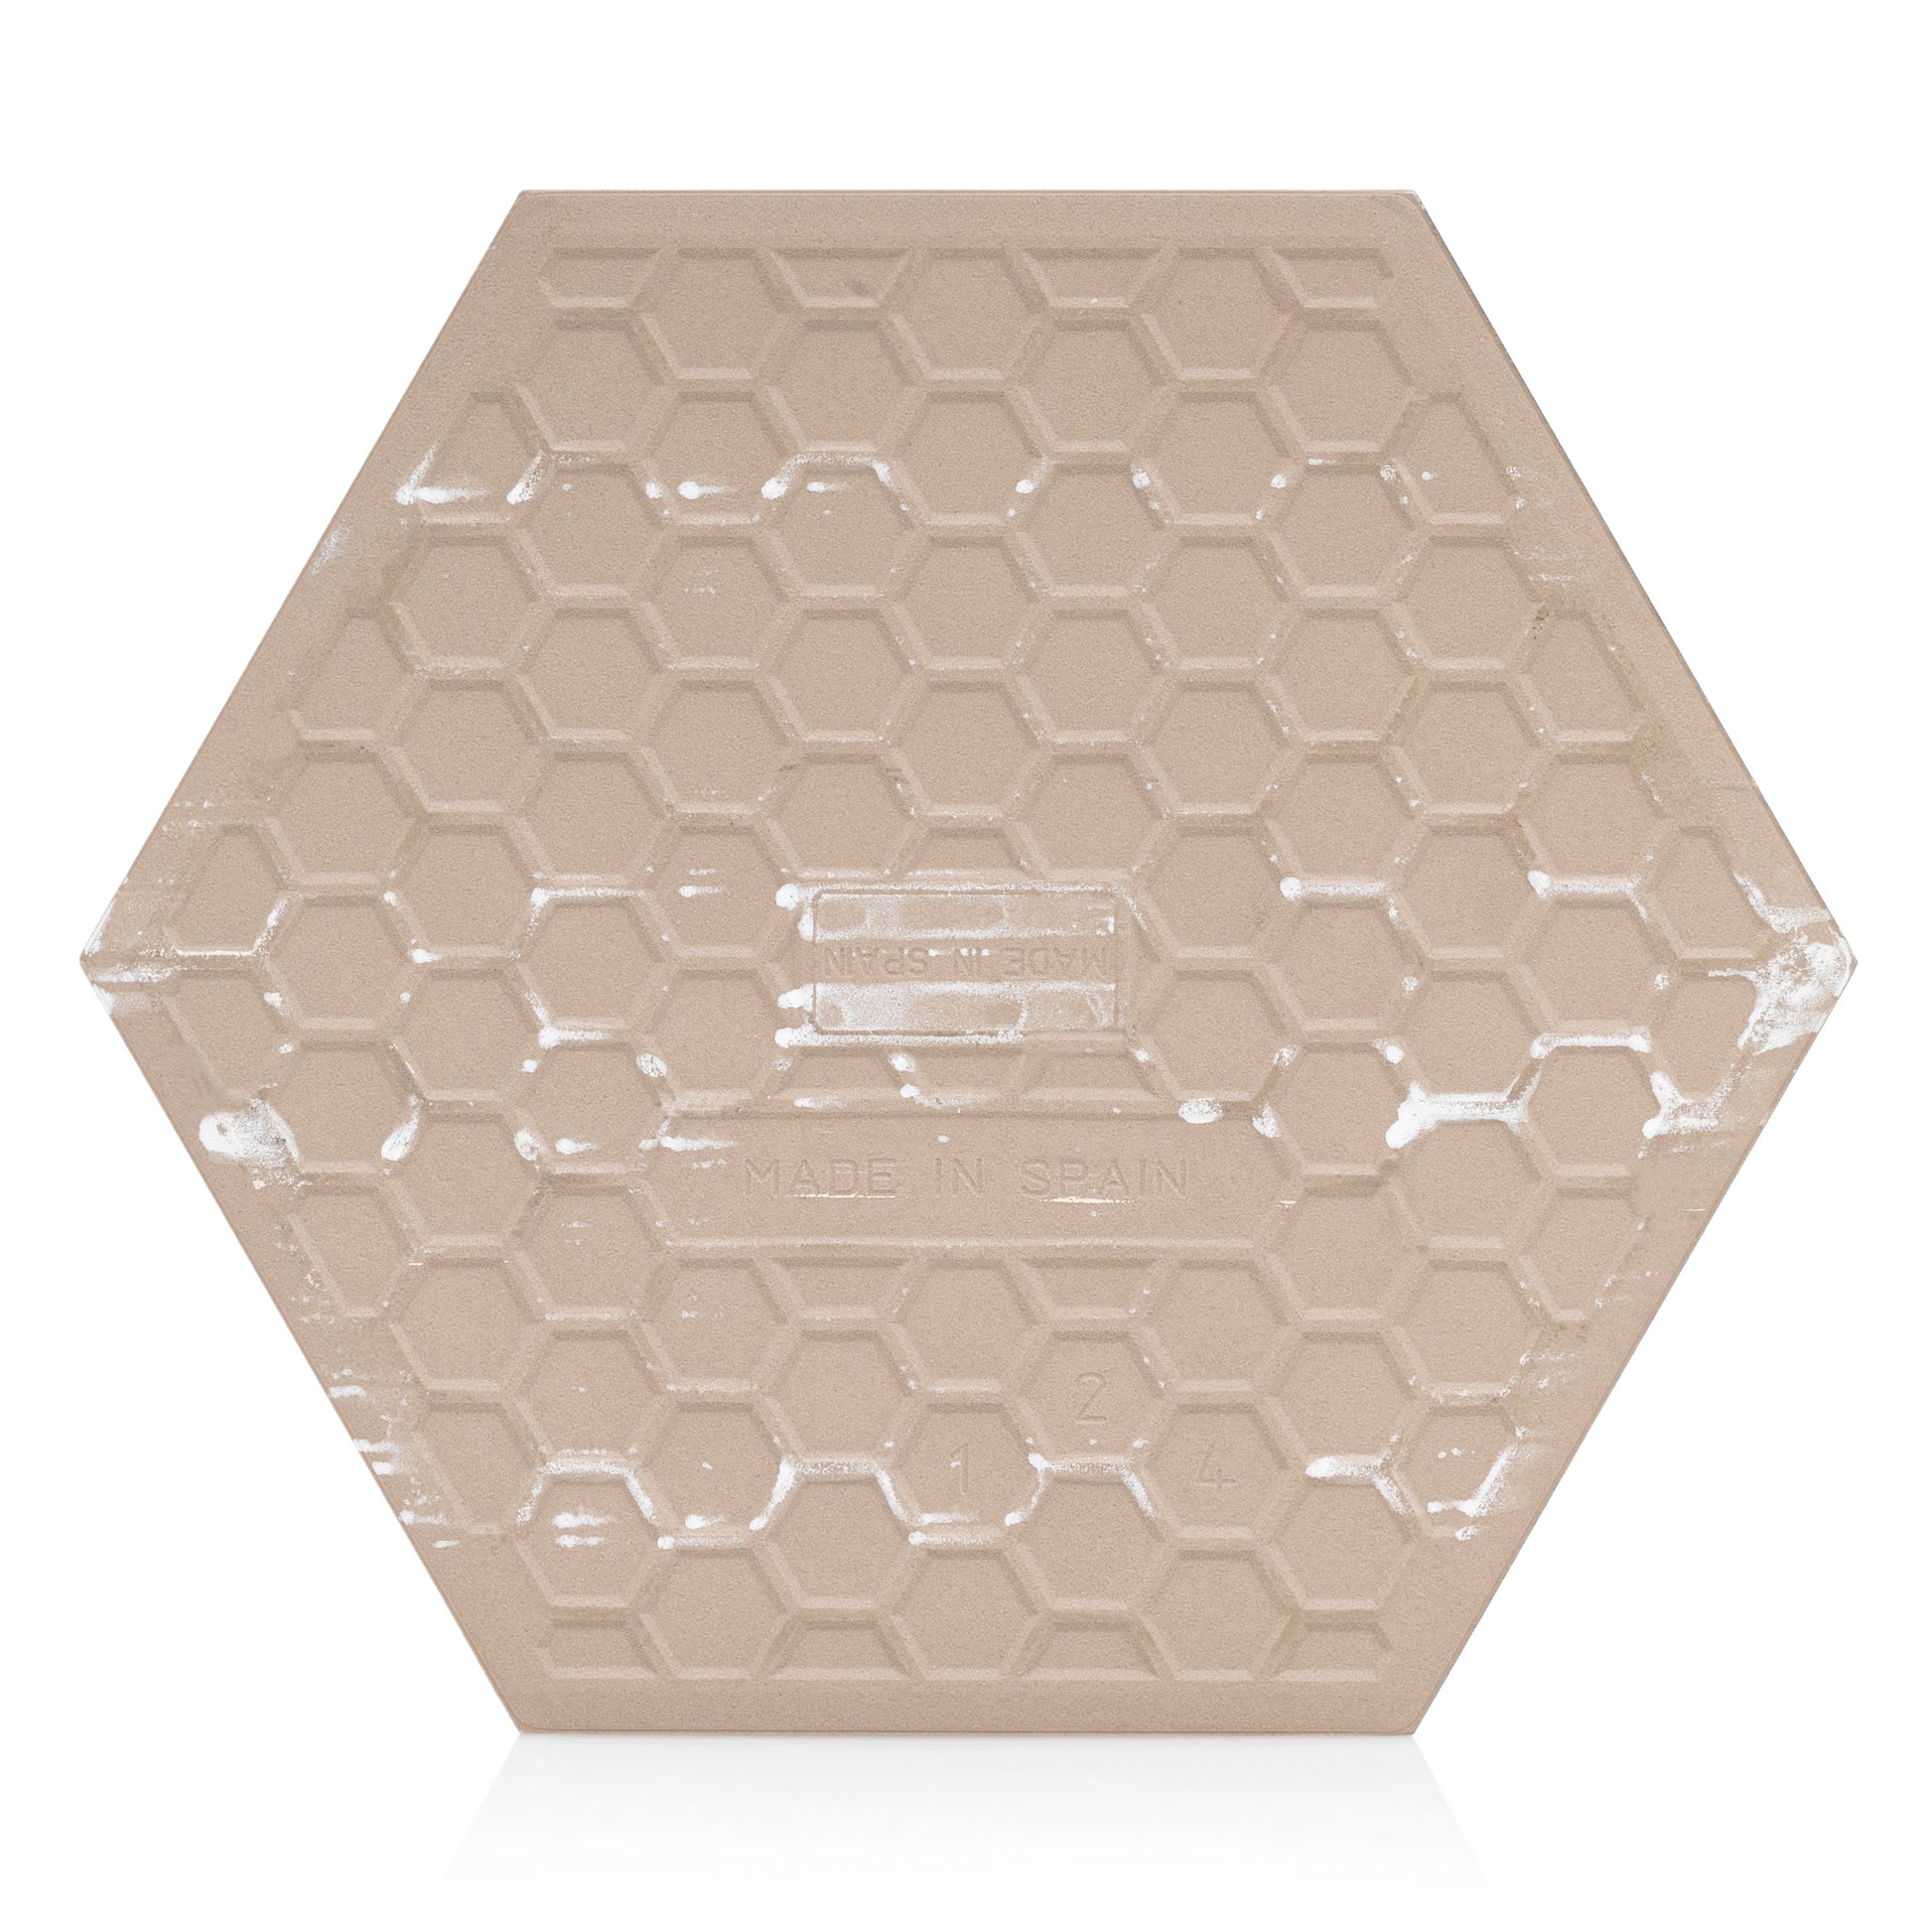 9x10 Hexagon Black porcelain tile - Industry Tile